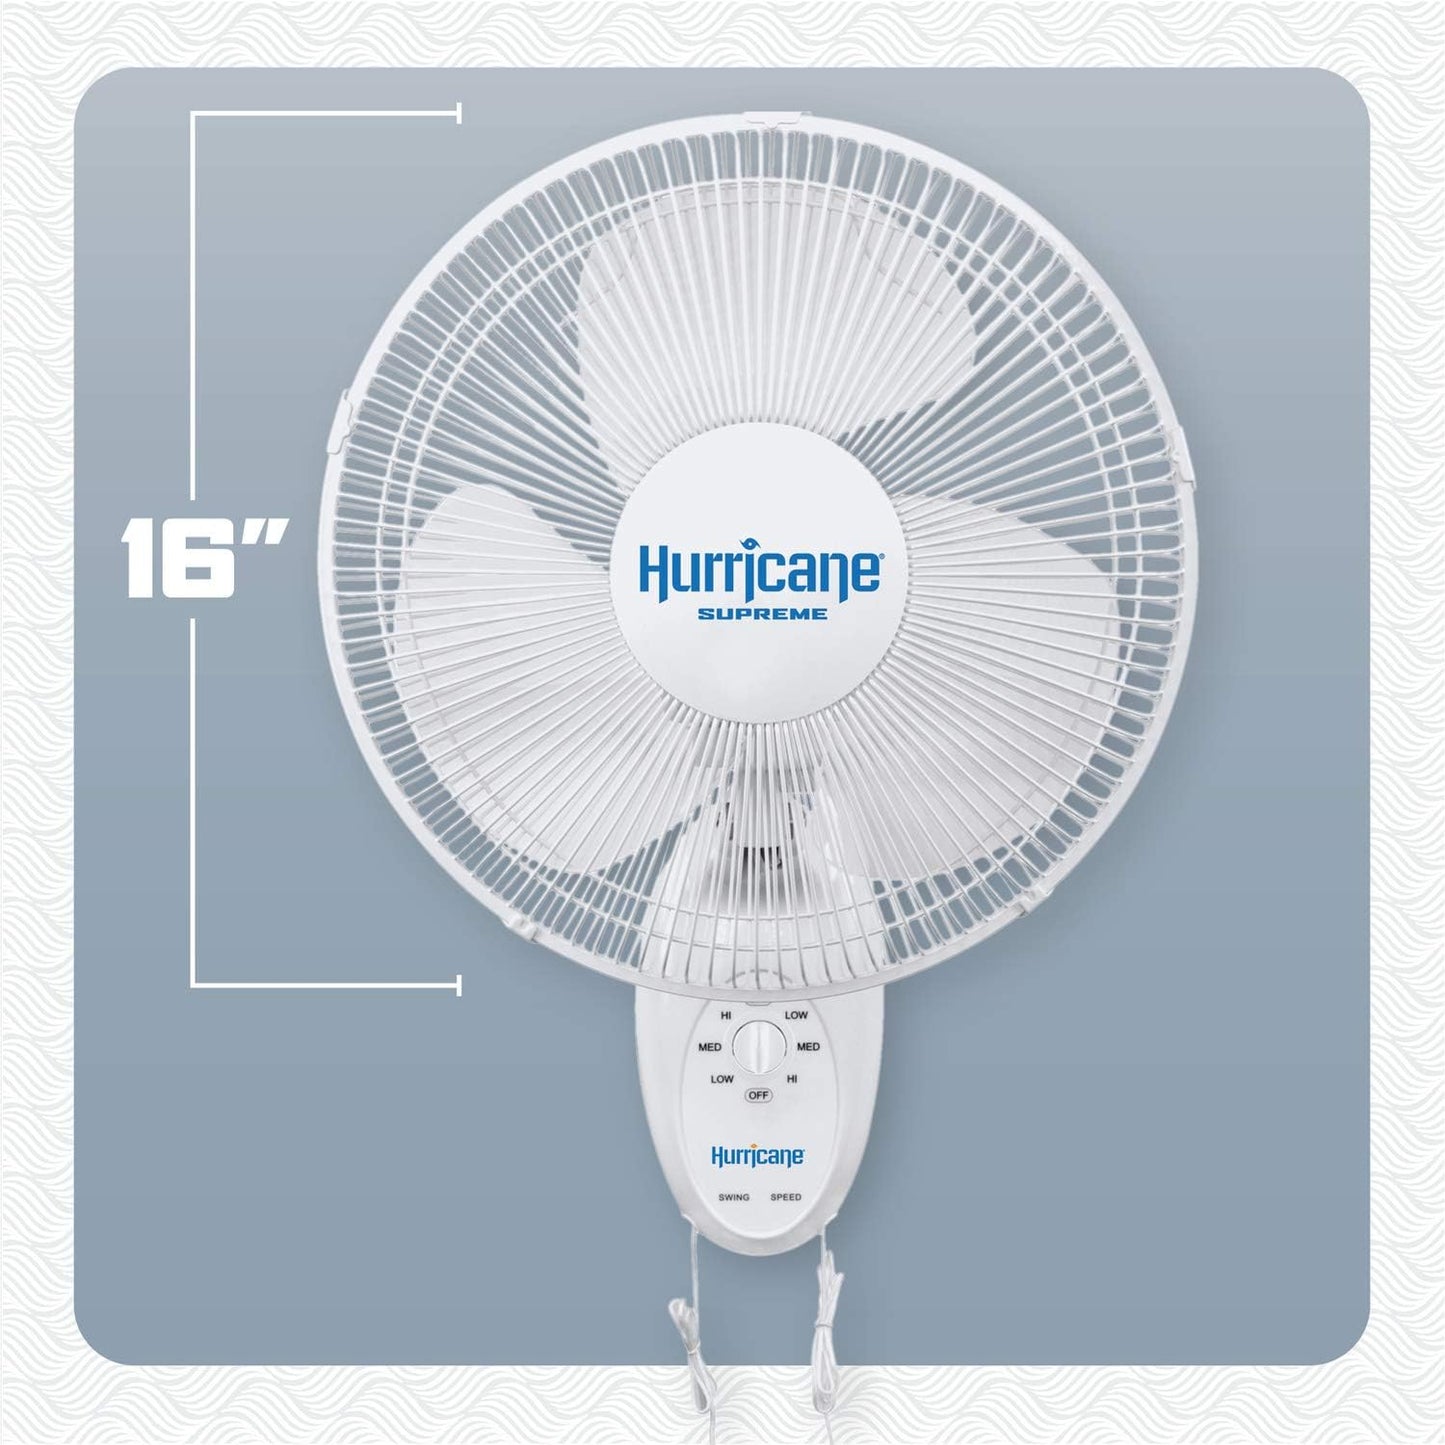 Hurricane Wall Mount Fan - 16 Inch, Supreme Series, Wall Fan with 90 Degree Oscillation, 3 Speed Settings, Adjustable Tilt - ETL Listed, White